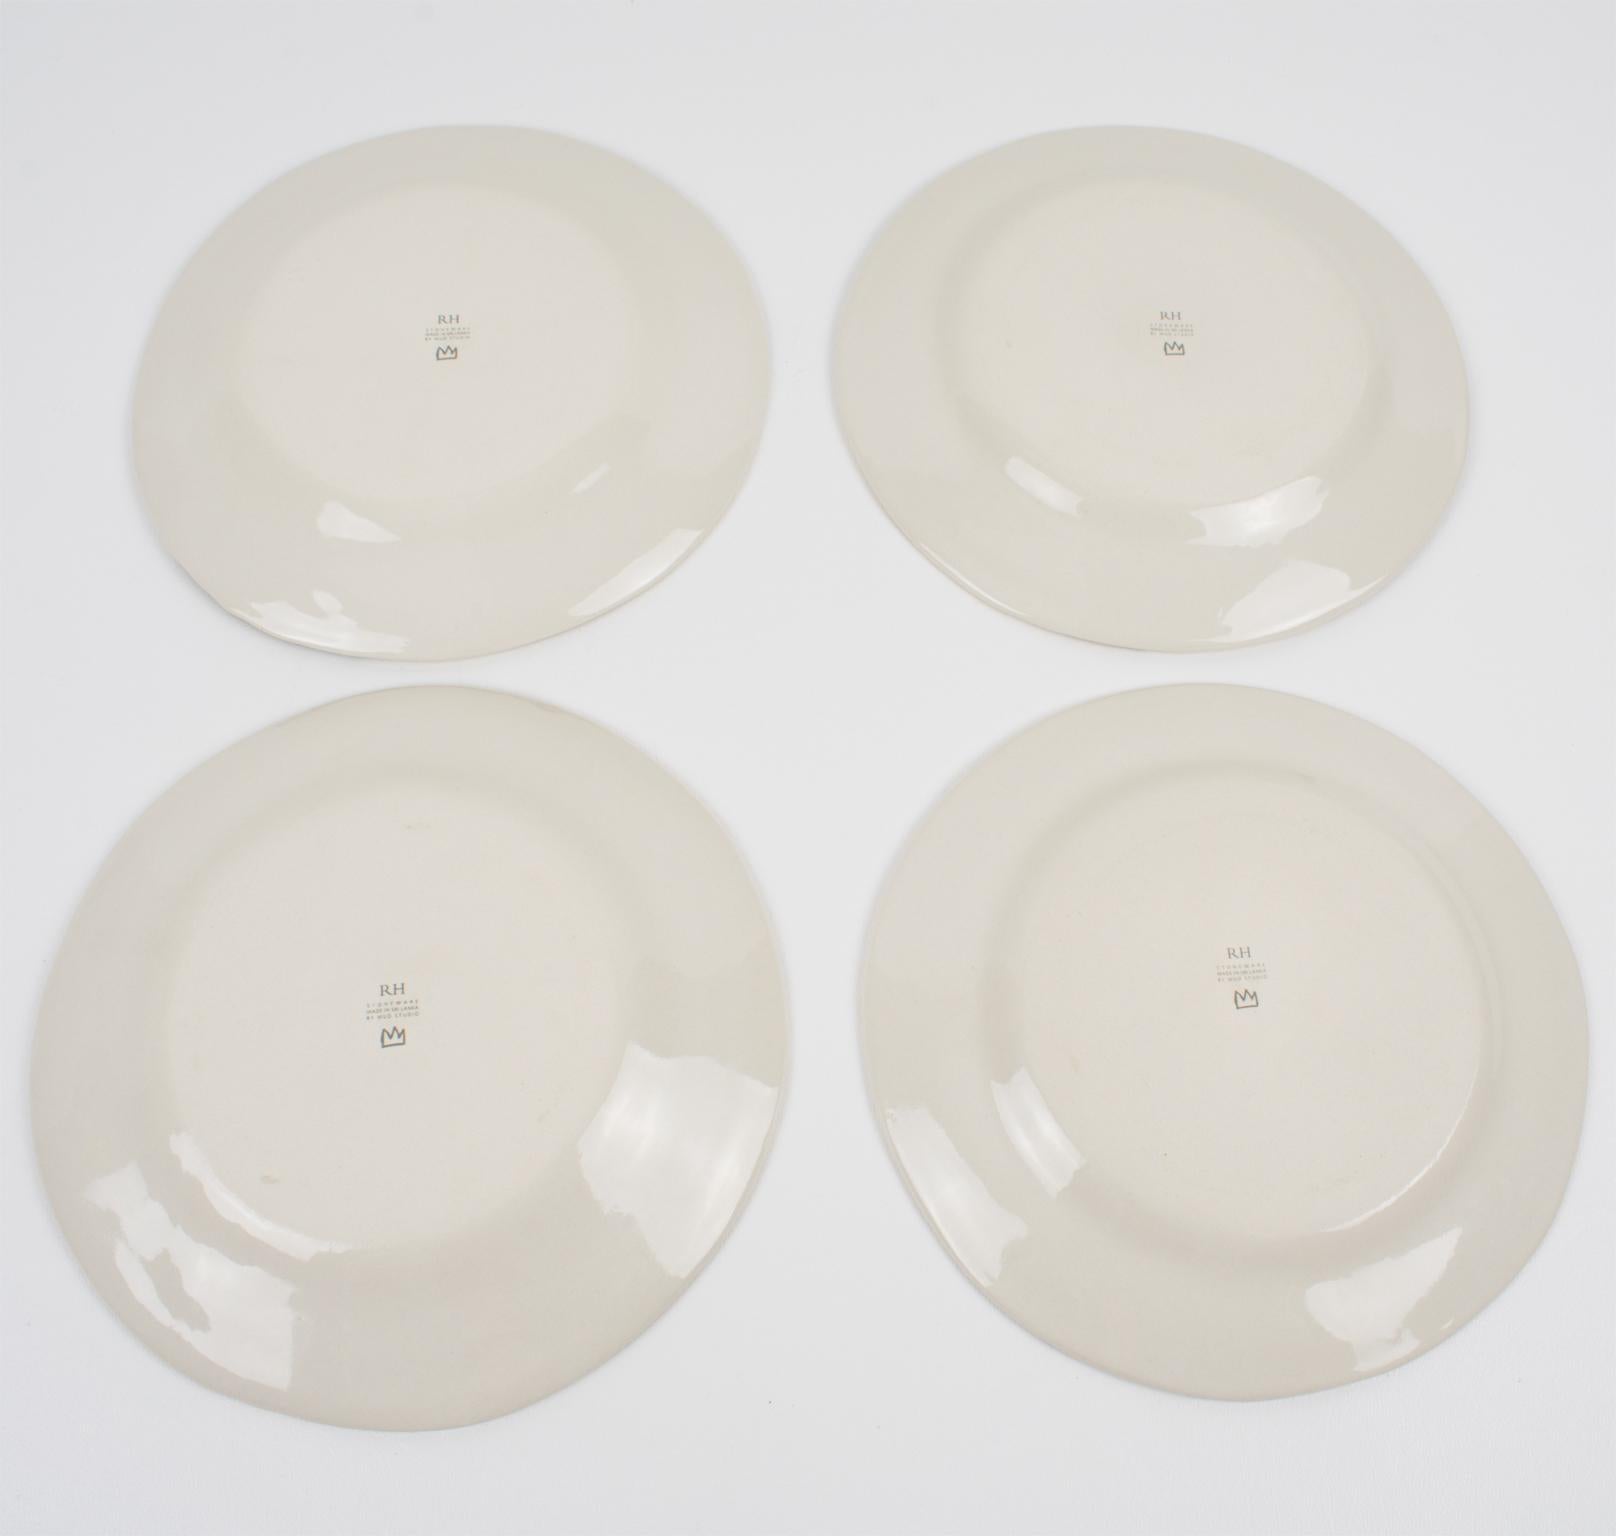 Modern Restoration Hardware Architectural Landmark Cocktail Plates, 4 pc in Box For Sale